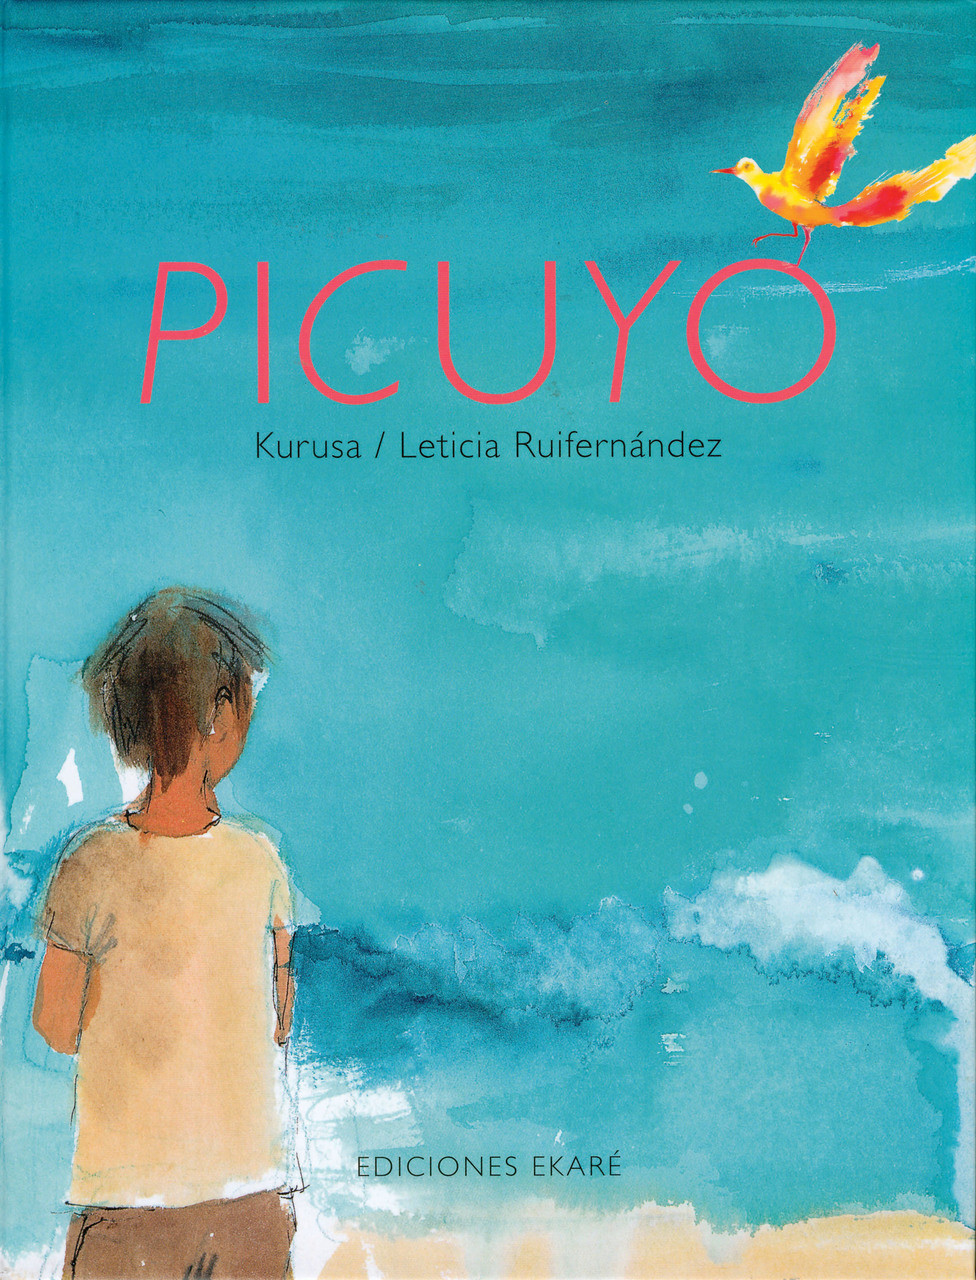 Picuyo (HC-9788493721251) - Picuyo - Lectorum Publications, Inc